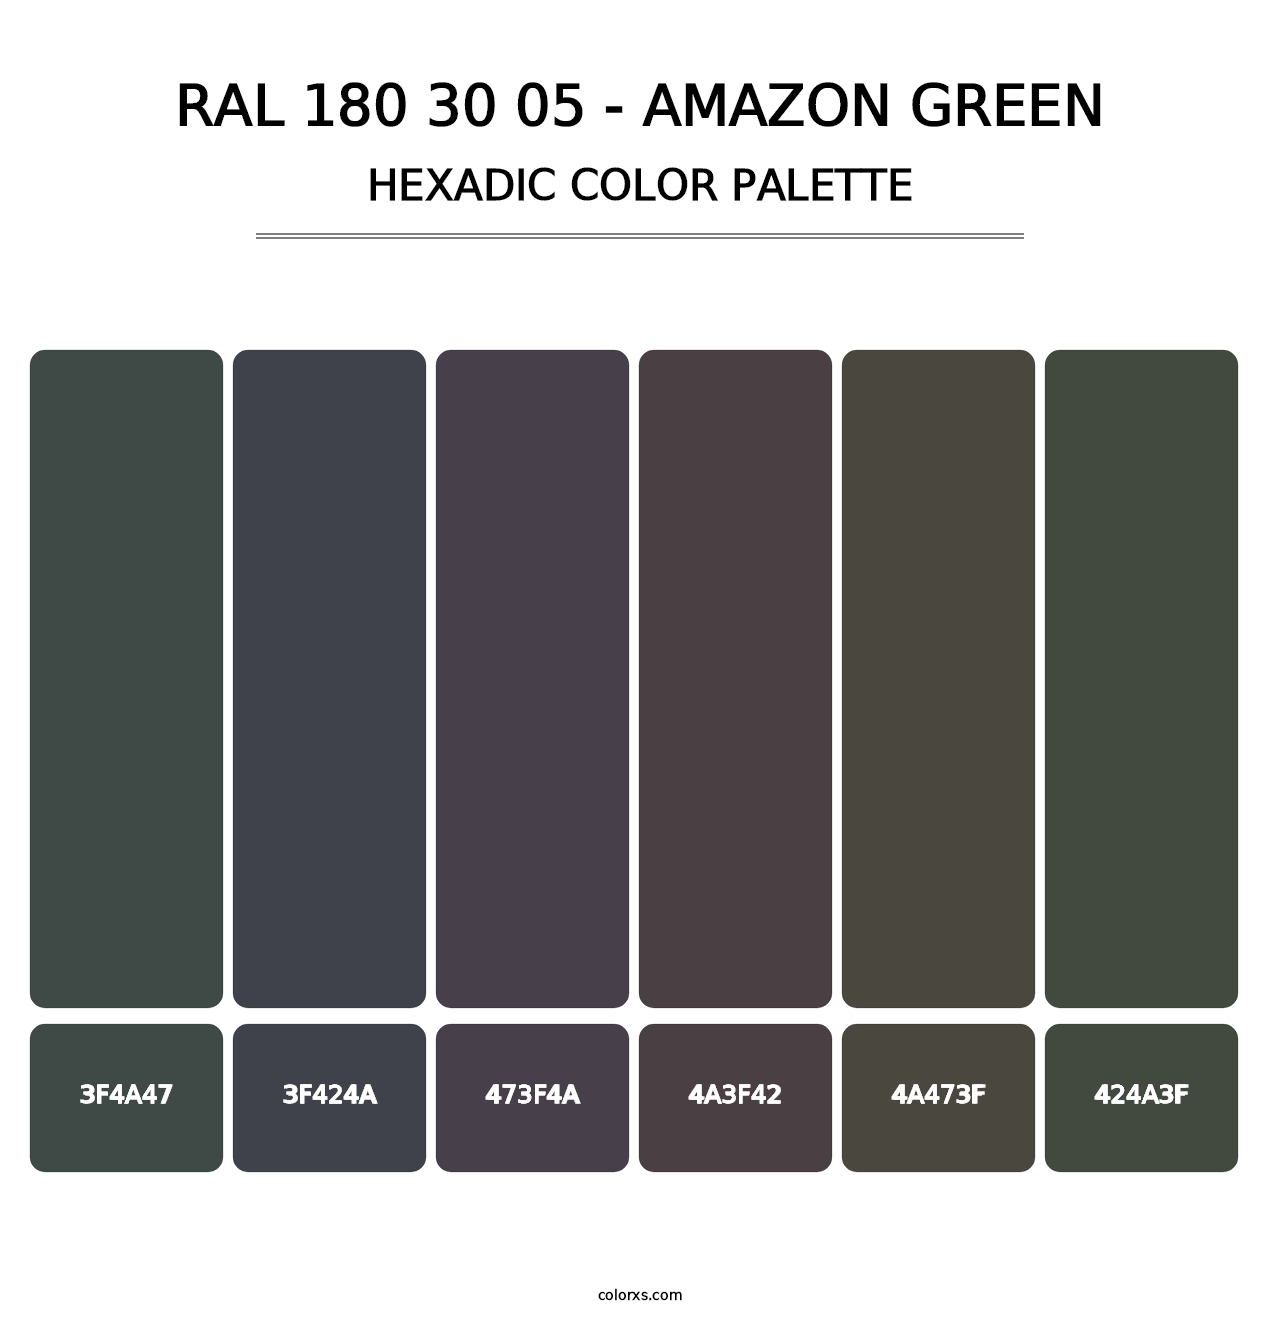 RAL 180 30 05 - Amazon Green - Hexadic Color Palette